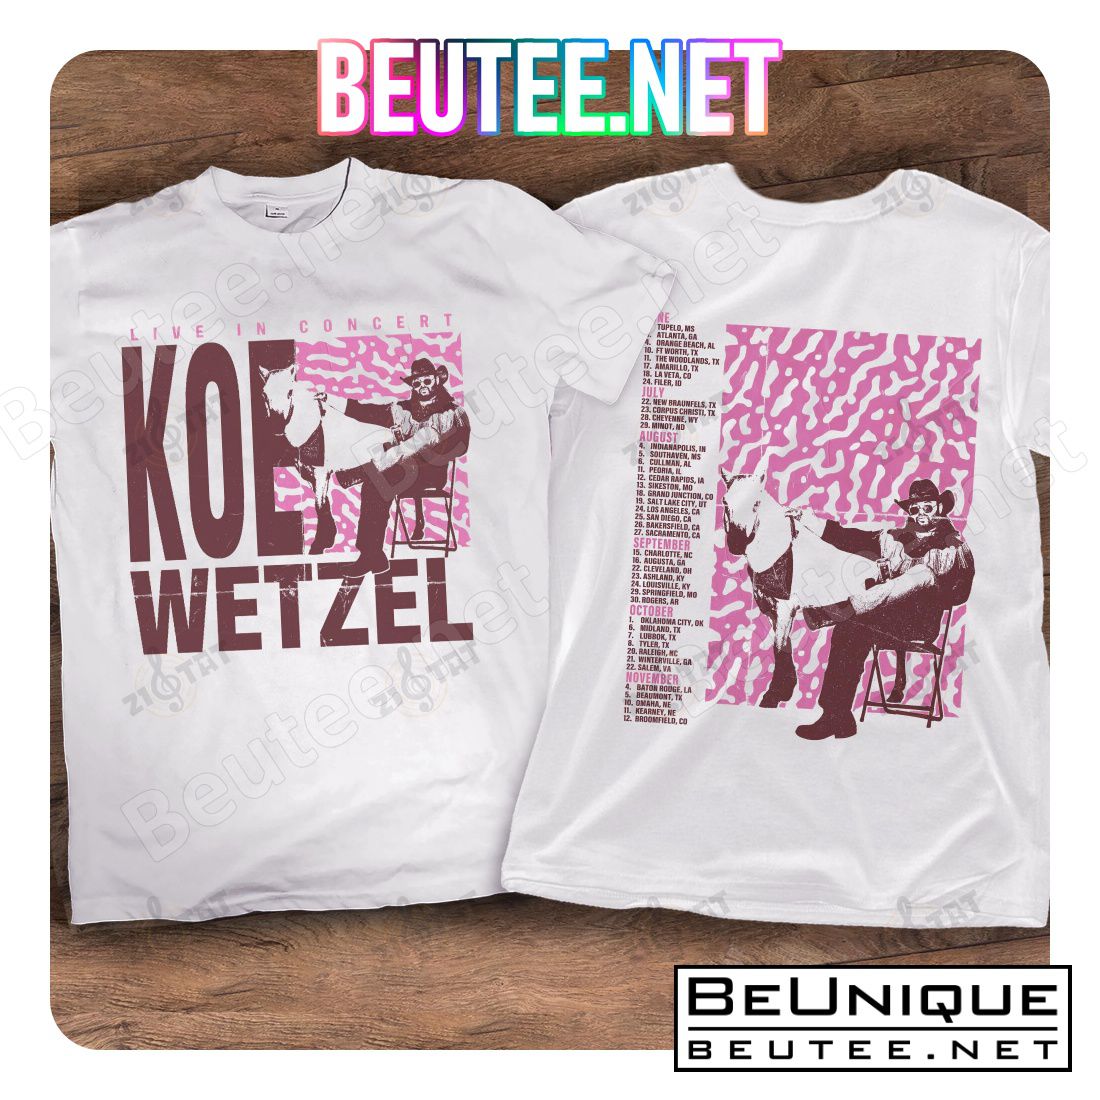 Koe Wetzel Tour Shirt